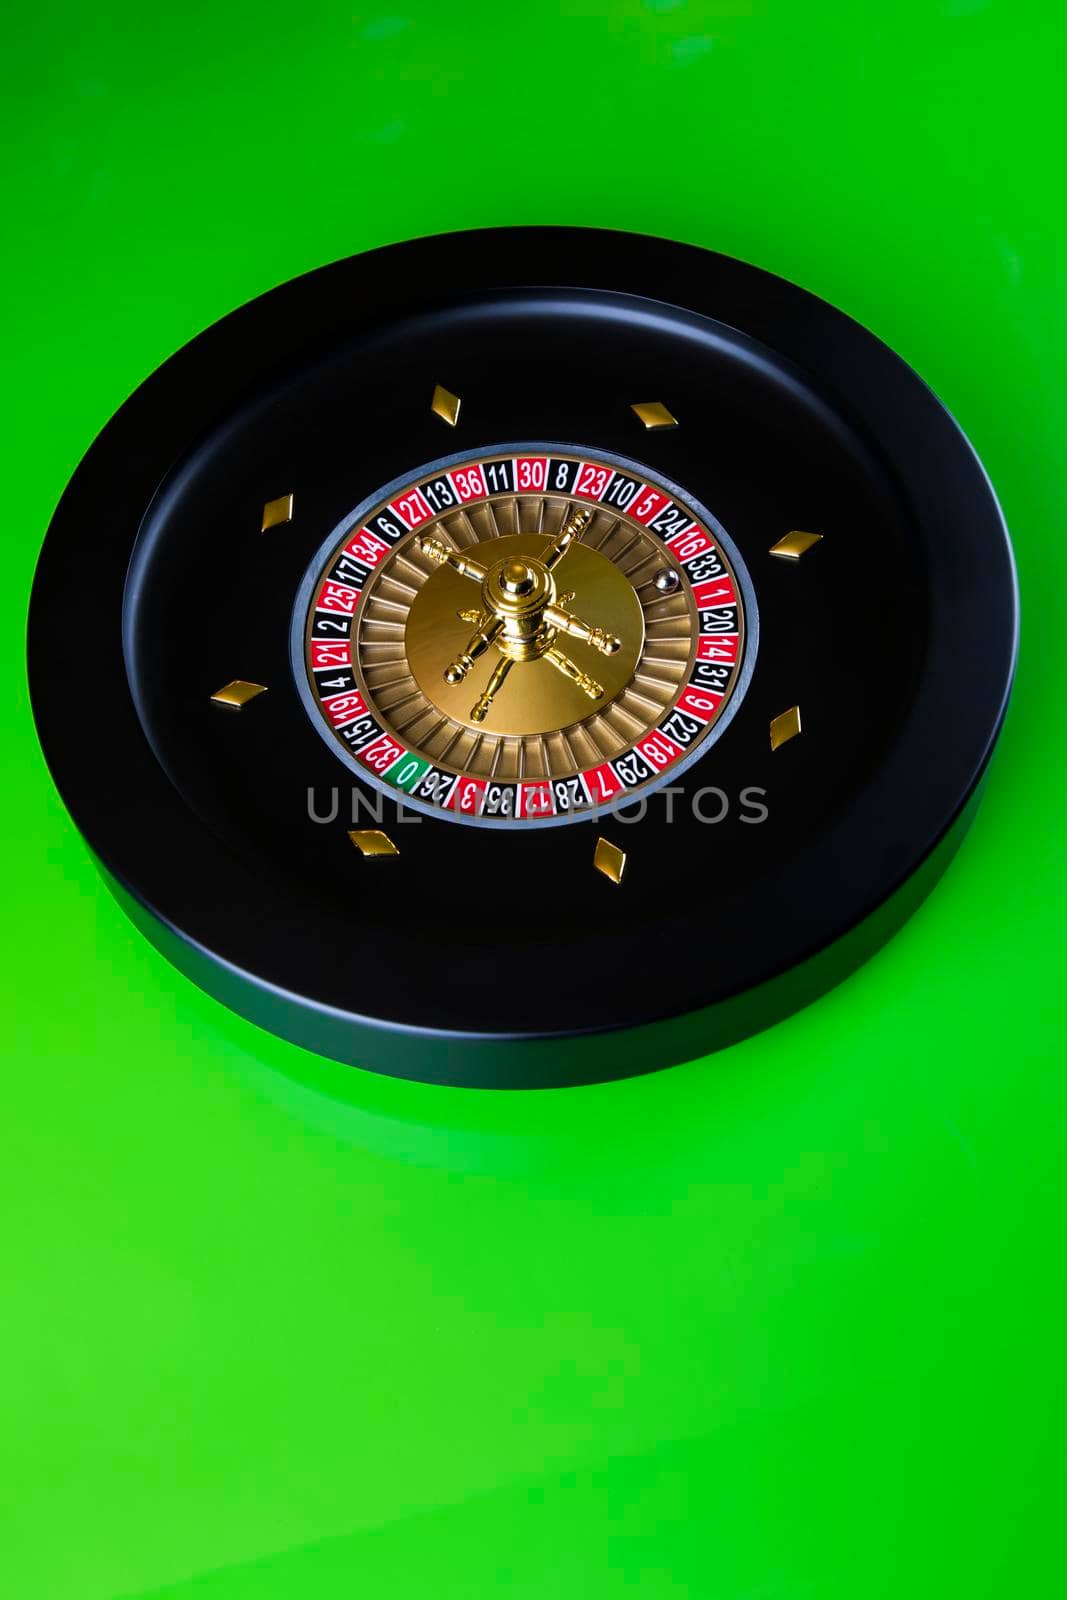 Classic casino roulette wheel by JanPietruszka